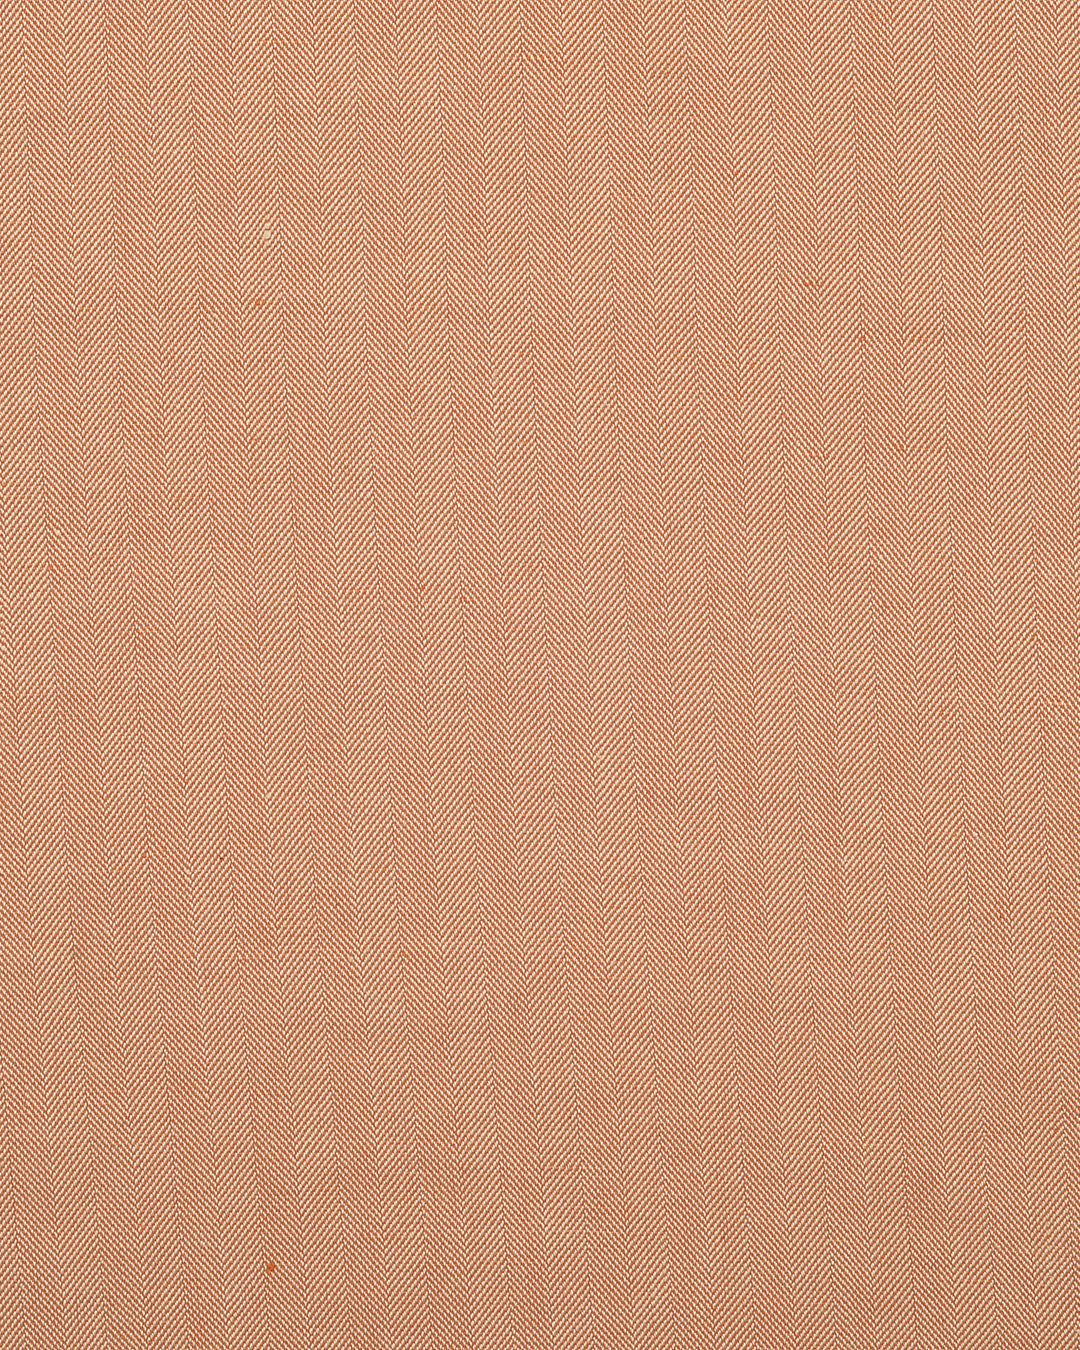 Linen Cotton Tan Brown Herringbone by Sondrio Italy